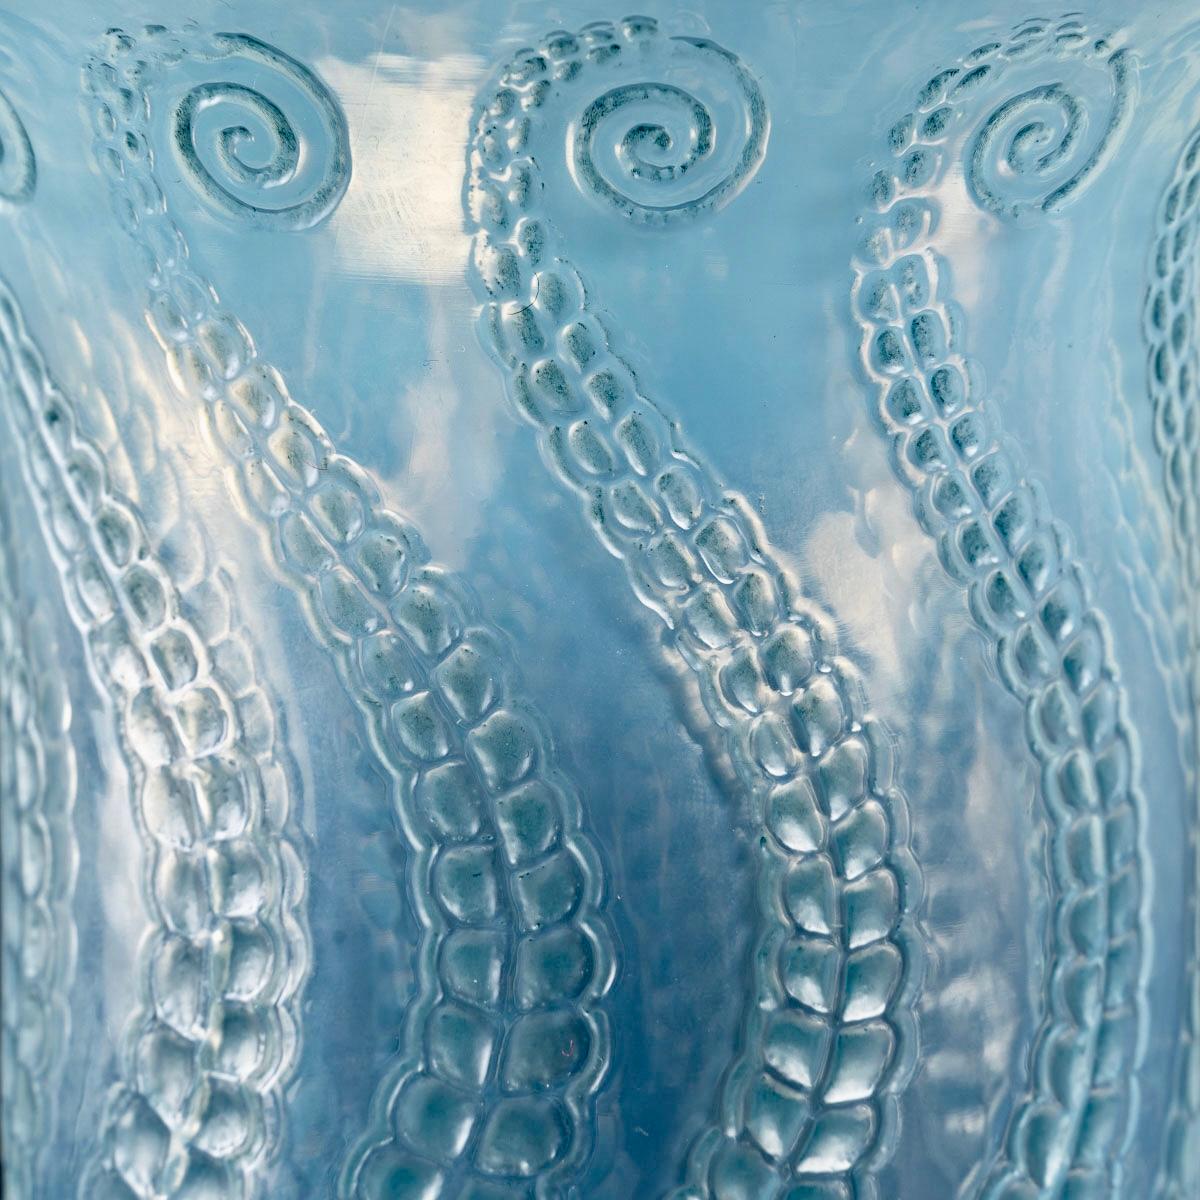 Molded 1921 René Lalique Meduse Vase in Opalescent Glass with Blue Patina, Medusa